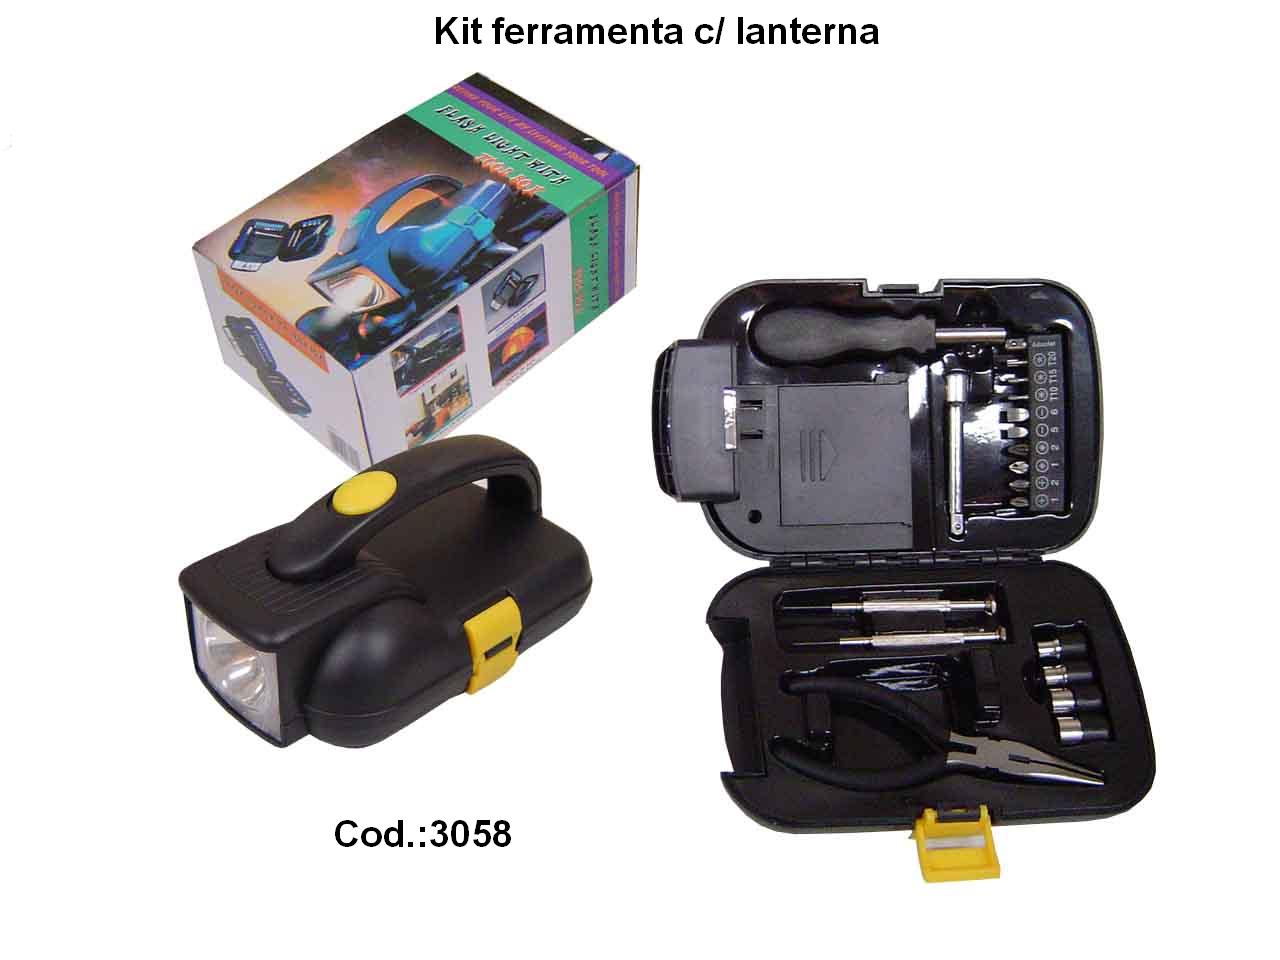 Kit ferramentas c/ lanterna (3058)